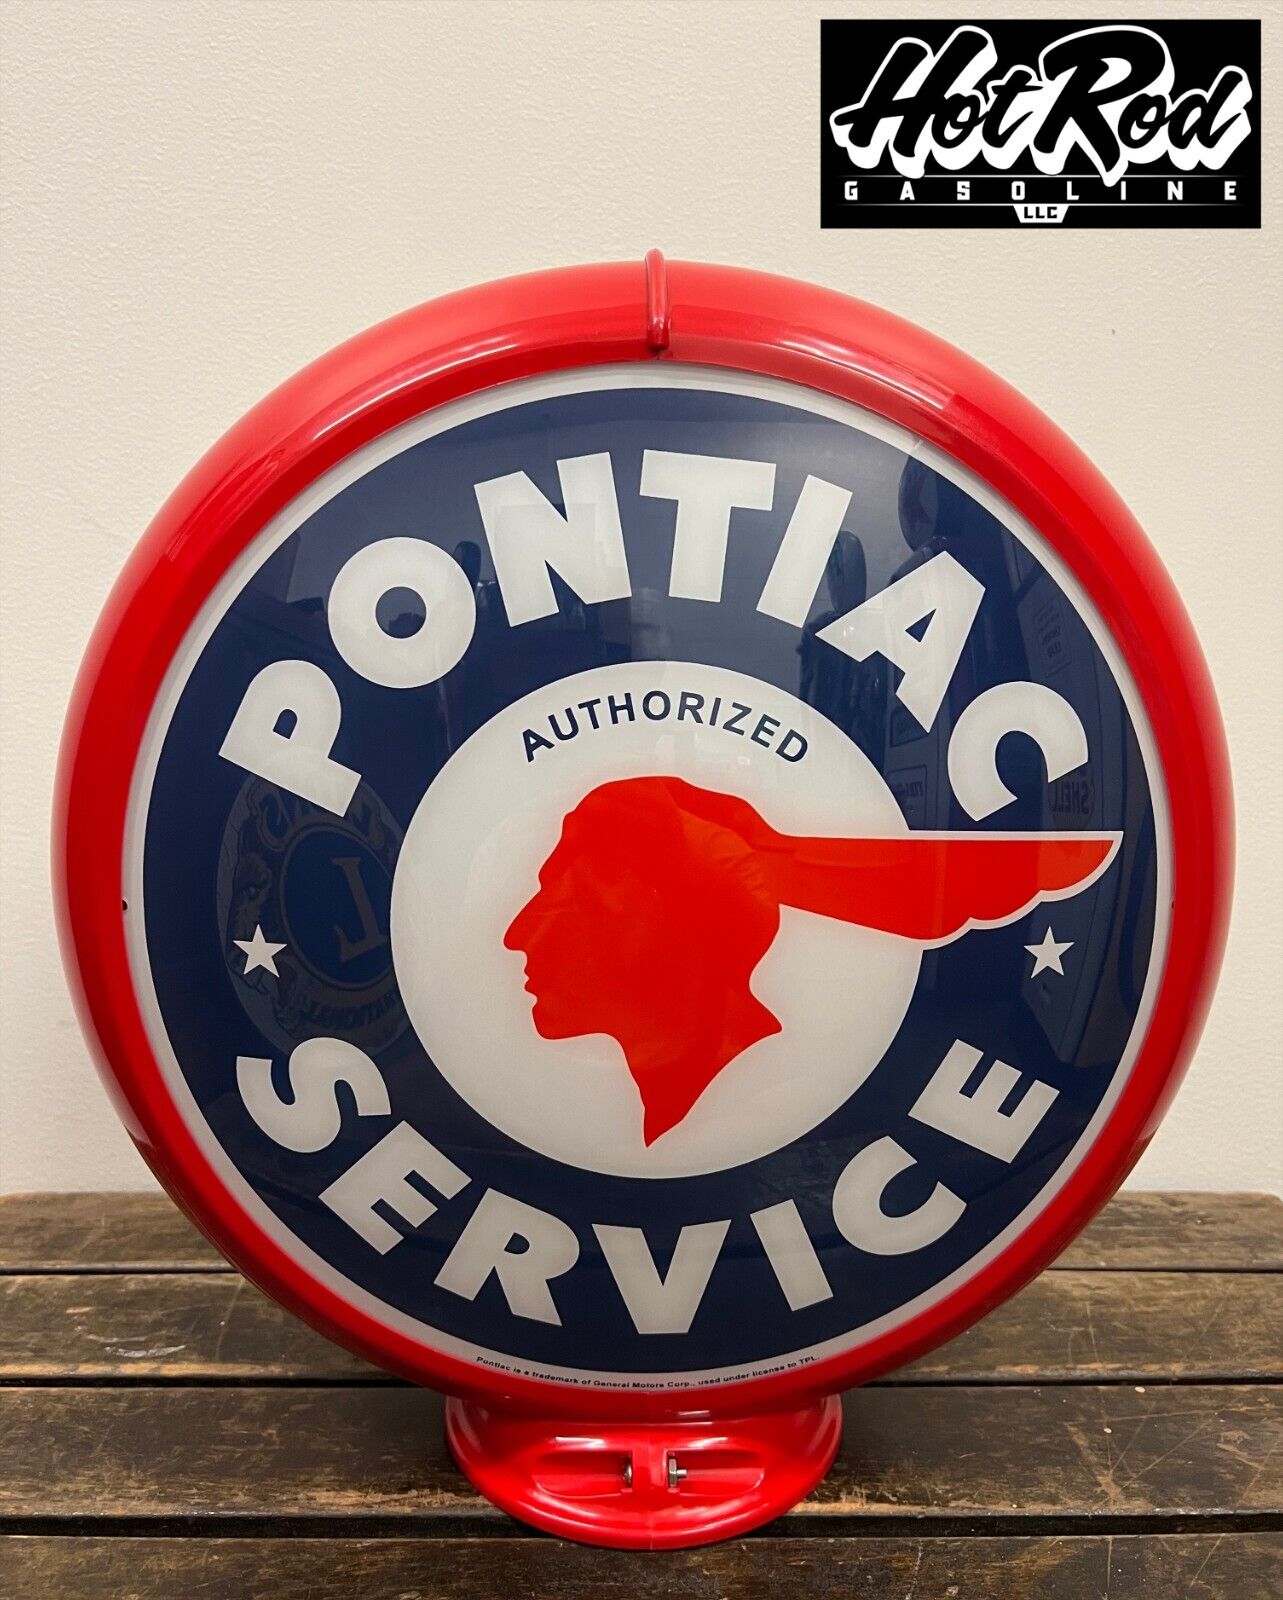 PONTIAC SERVICE Reproduction 13.5